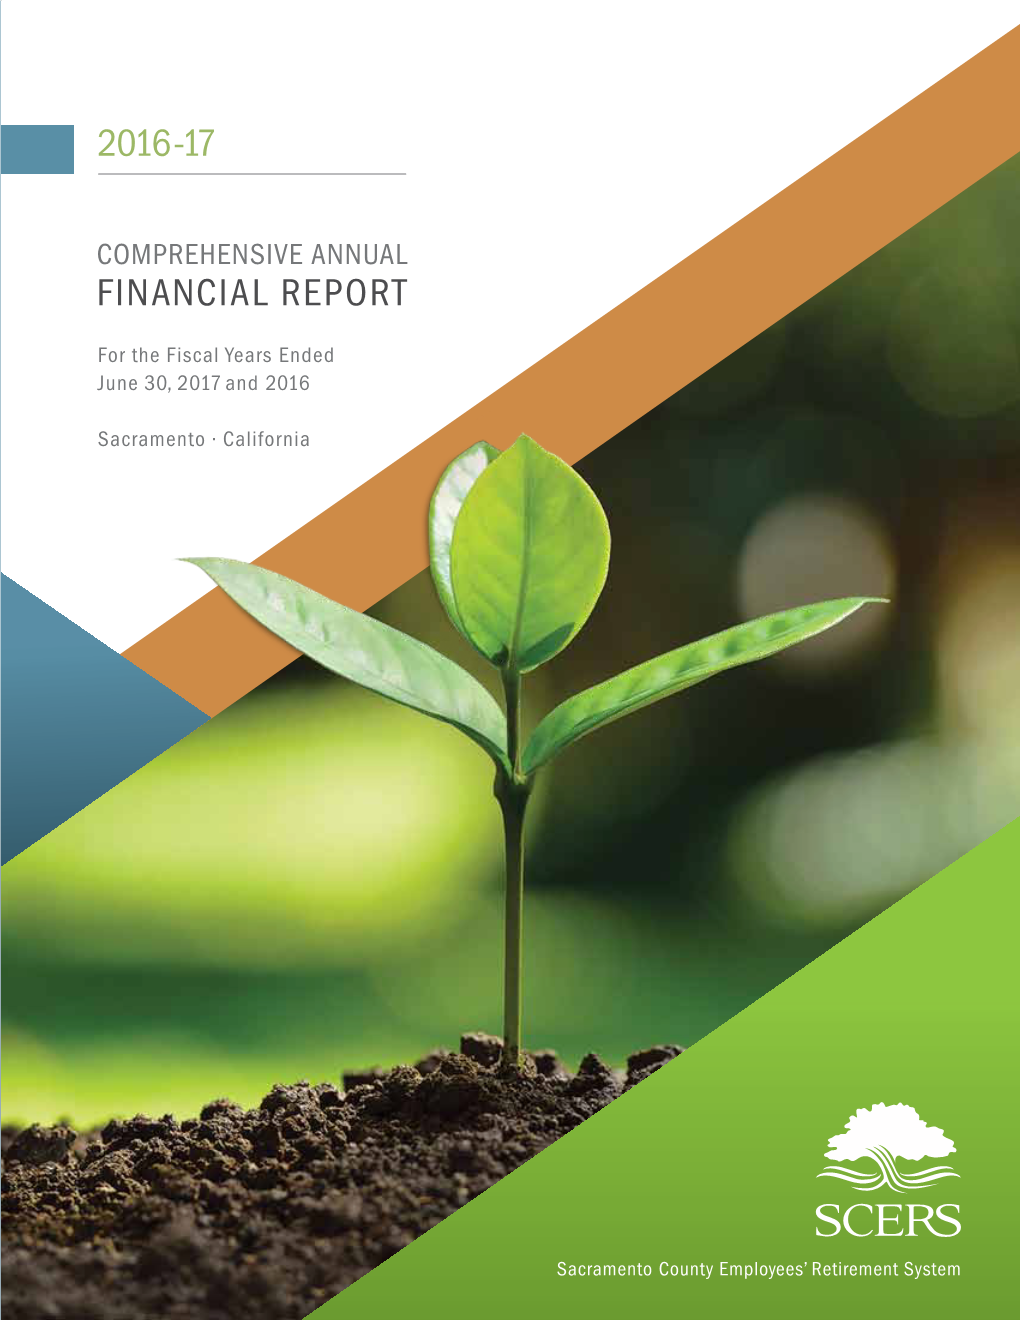 Financial Report 2016-17